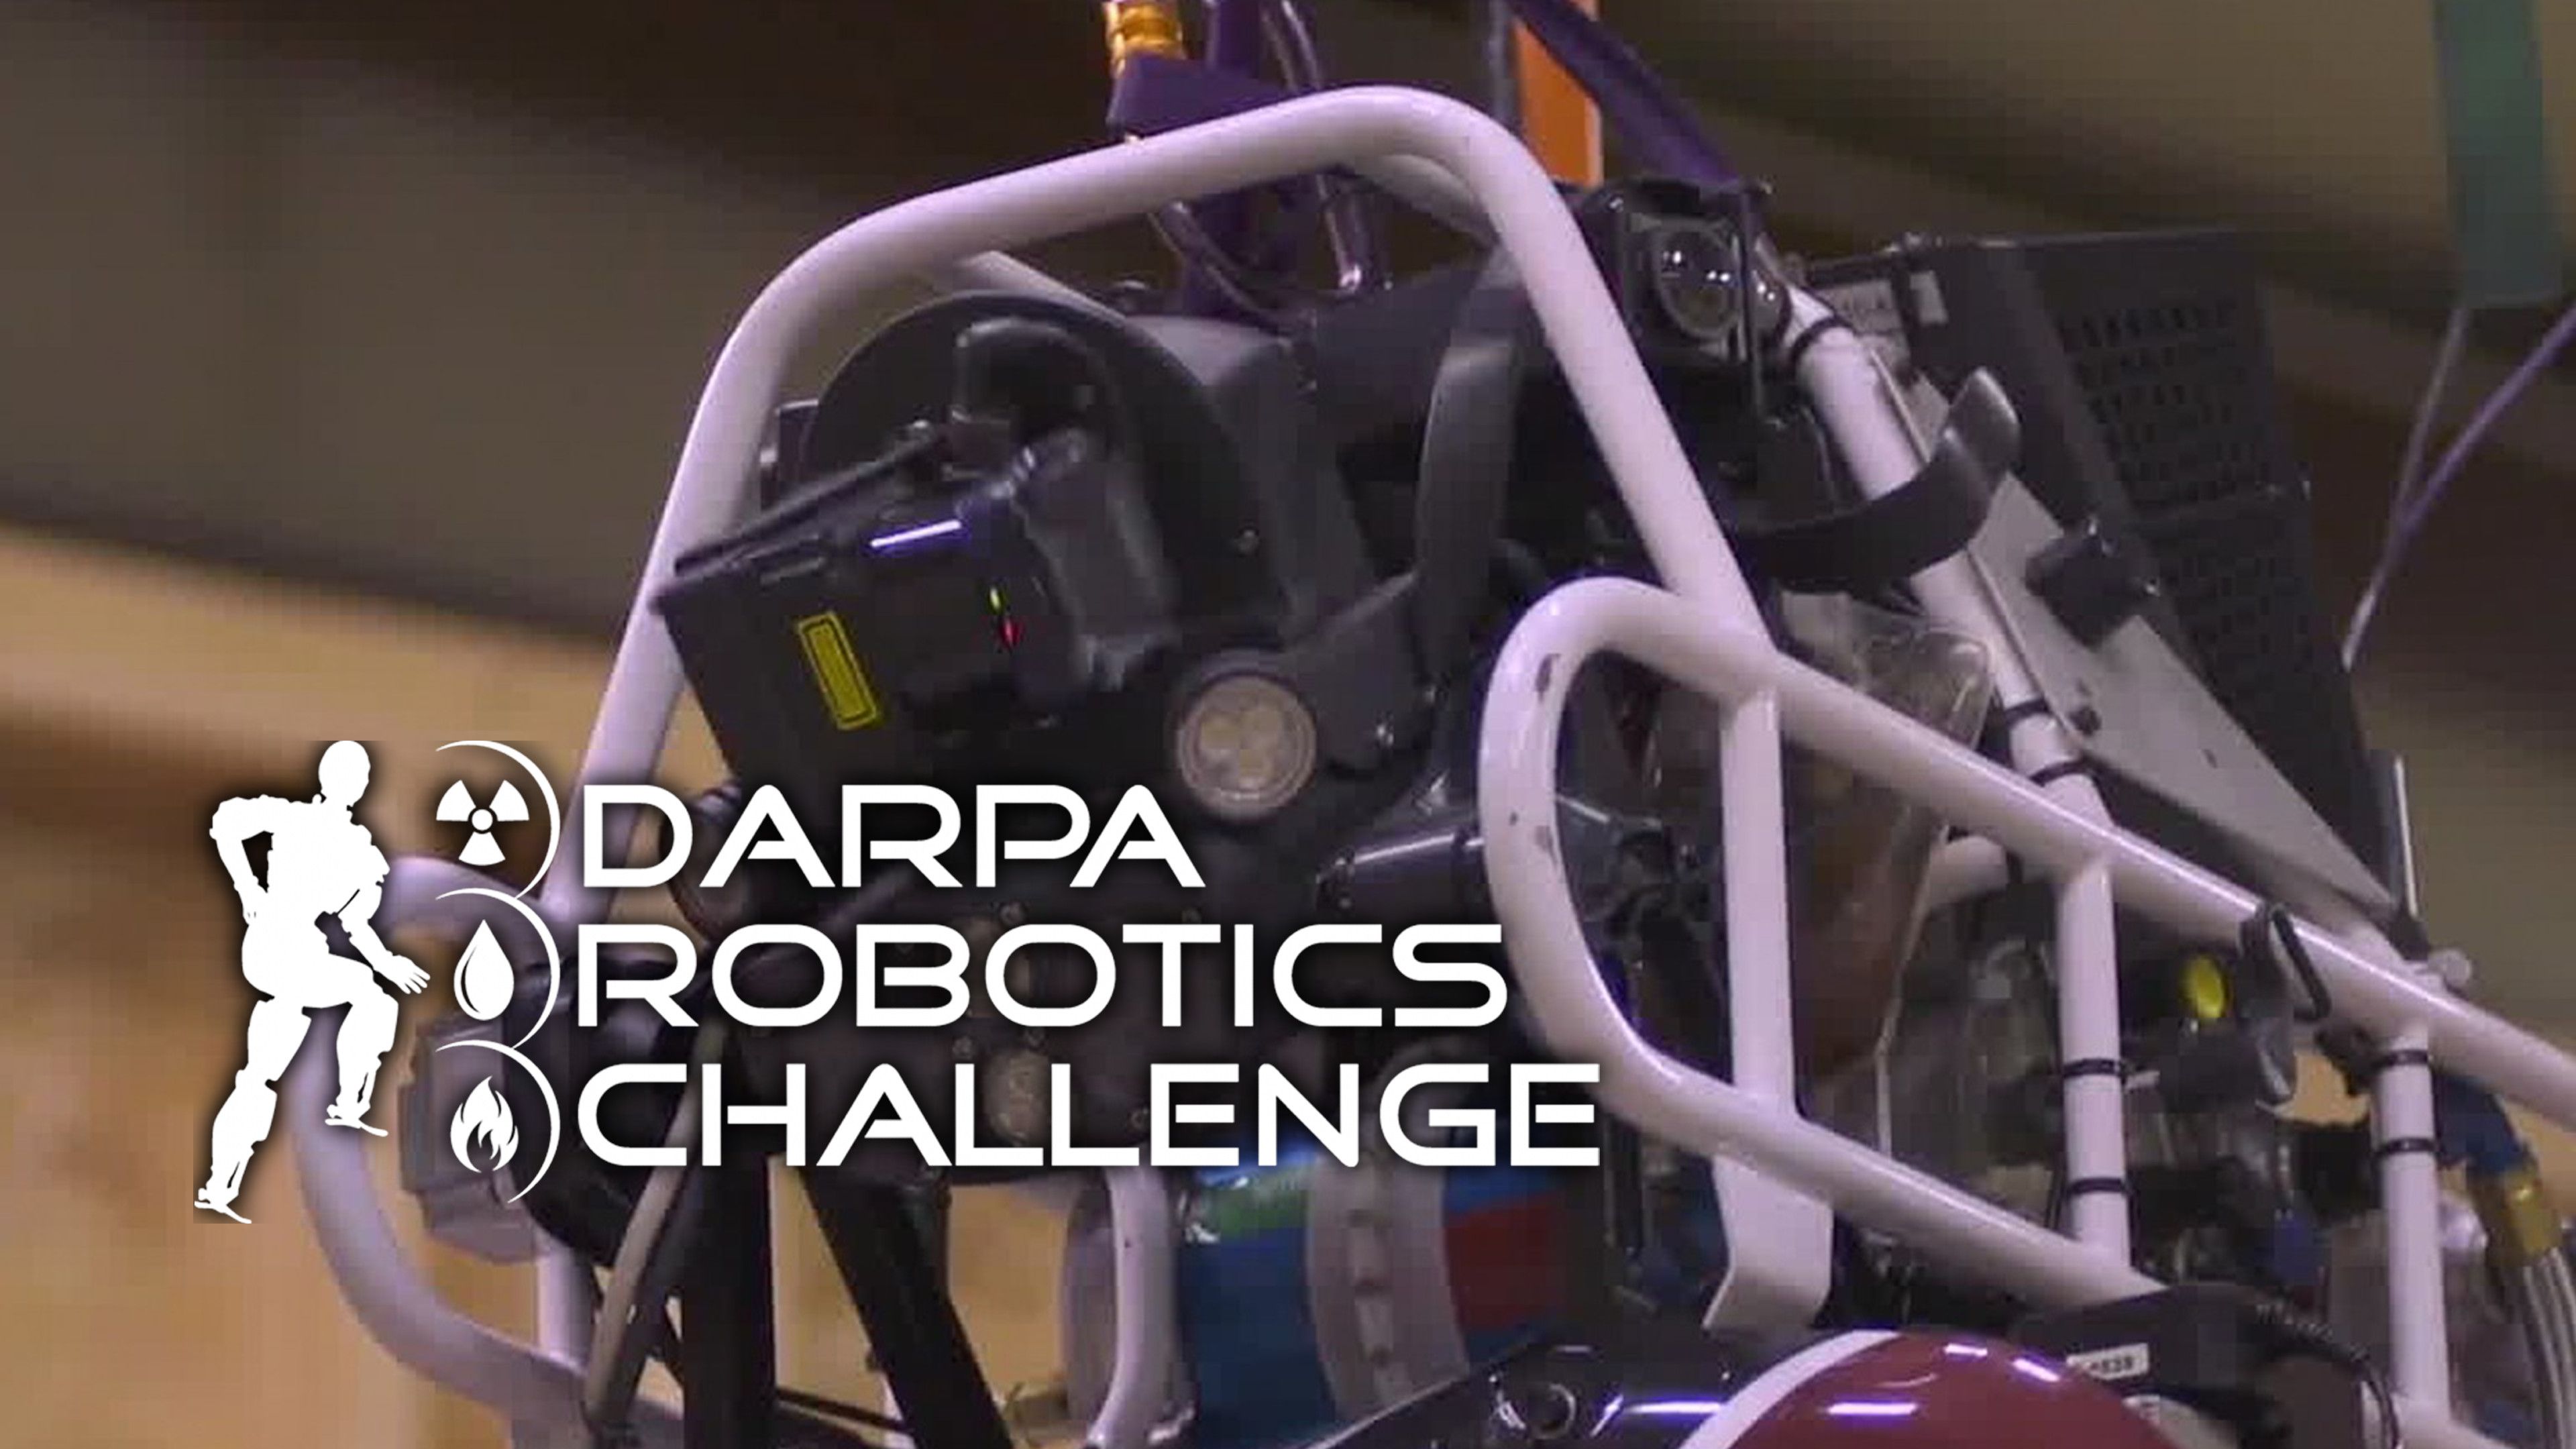 DARPA Robotics Challenge Team ViGIR